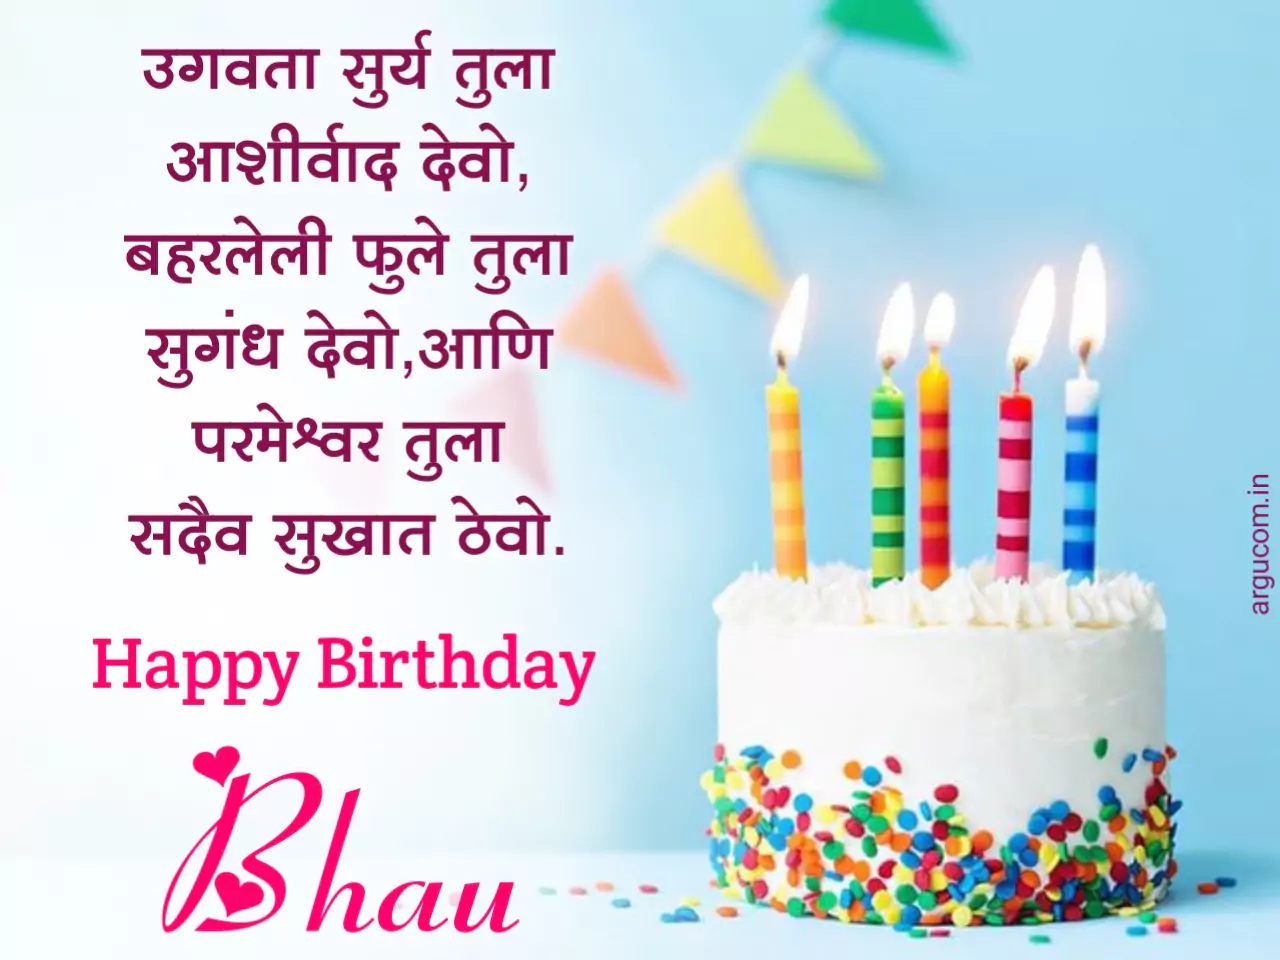 bhavala birthday wishes in marathi , भावाला वाढदिवसाच्या हार्दिक शुभेच्छा